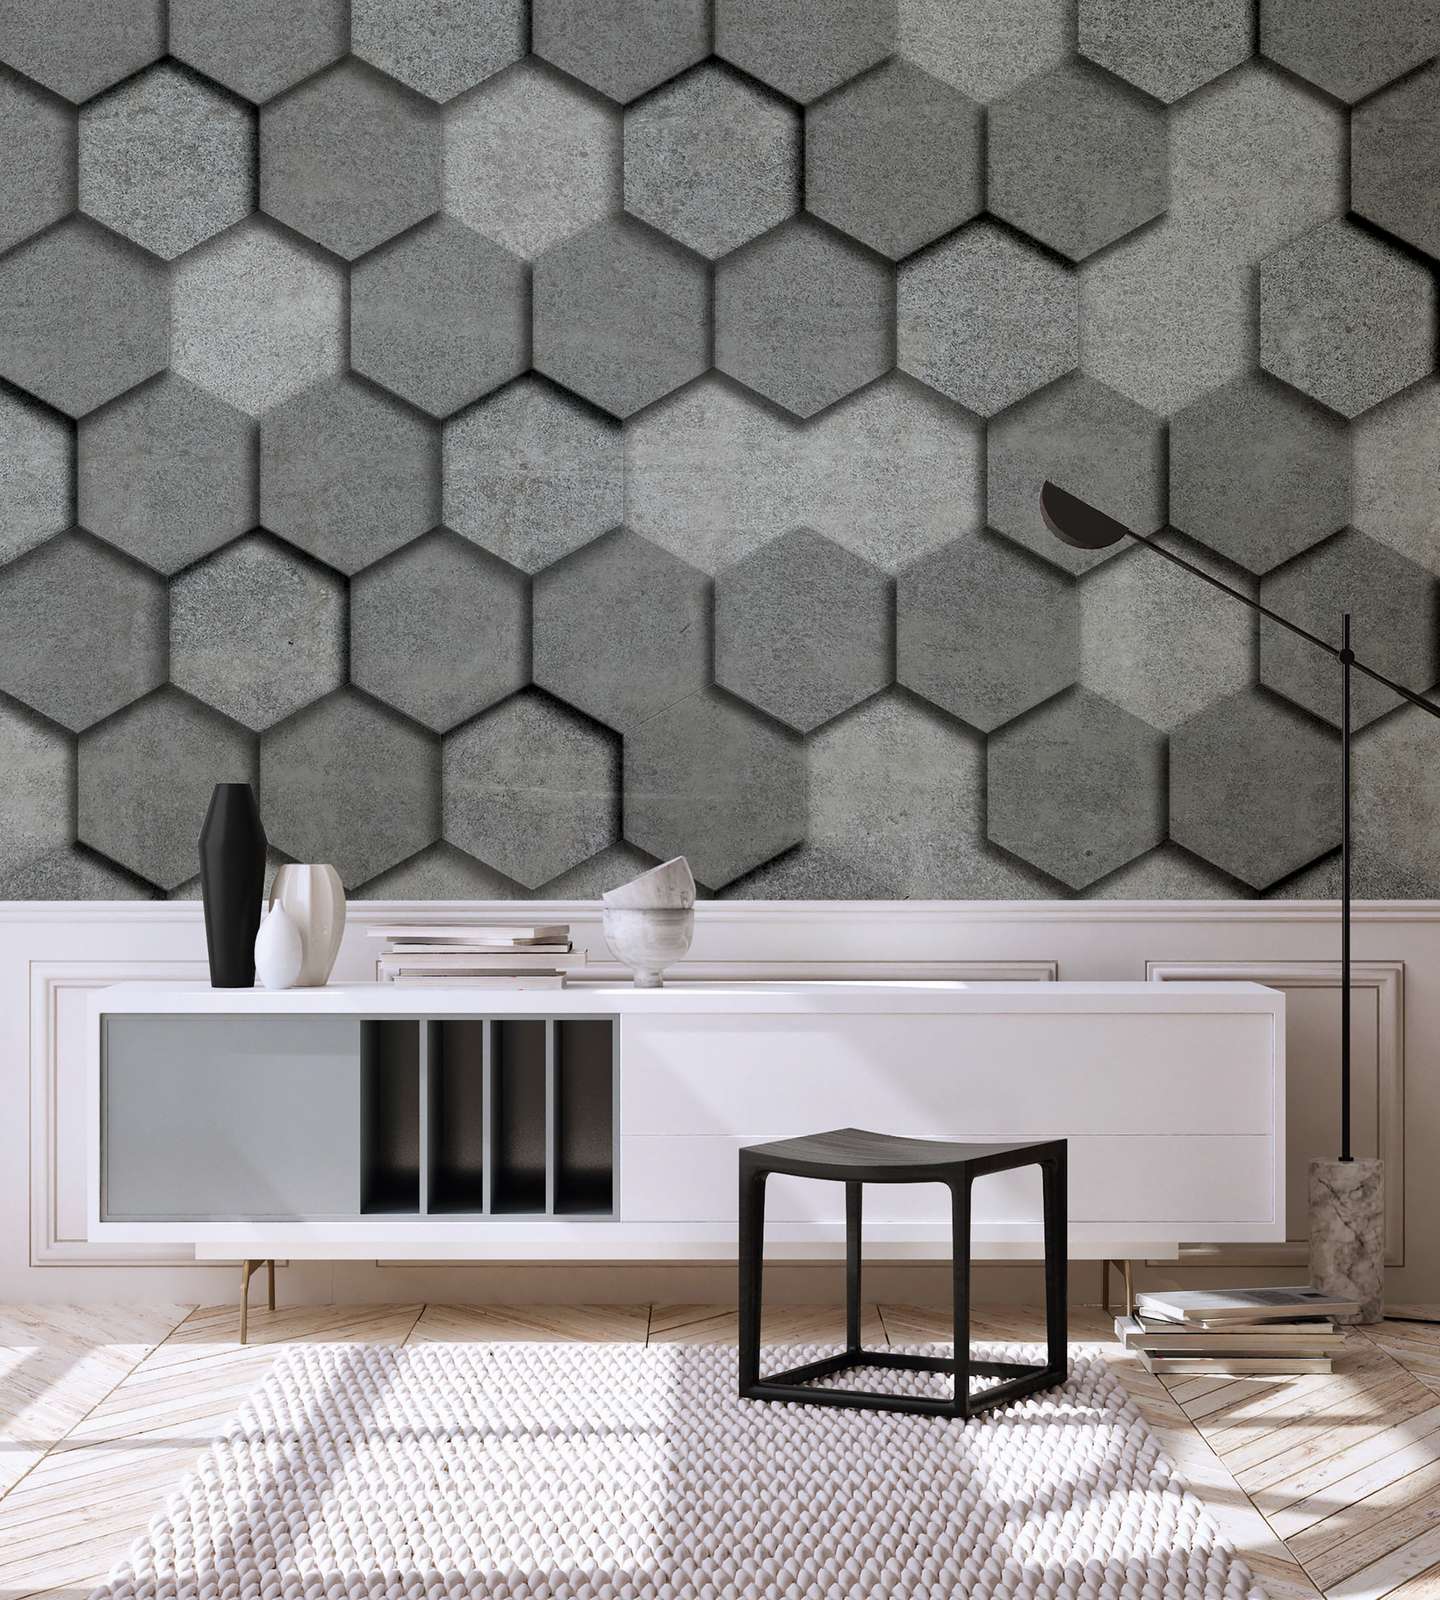             Photo wallpaper with geometric tiles hexagonal 3D look - grey, silver
        